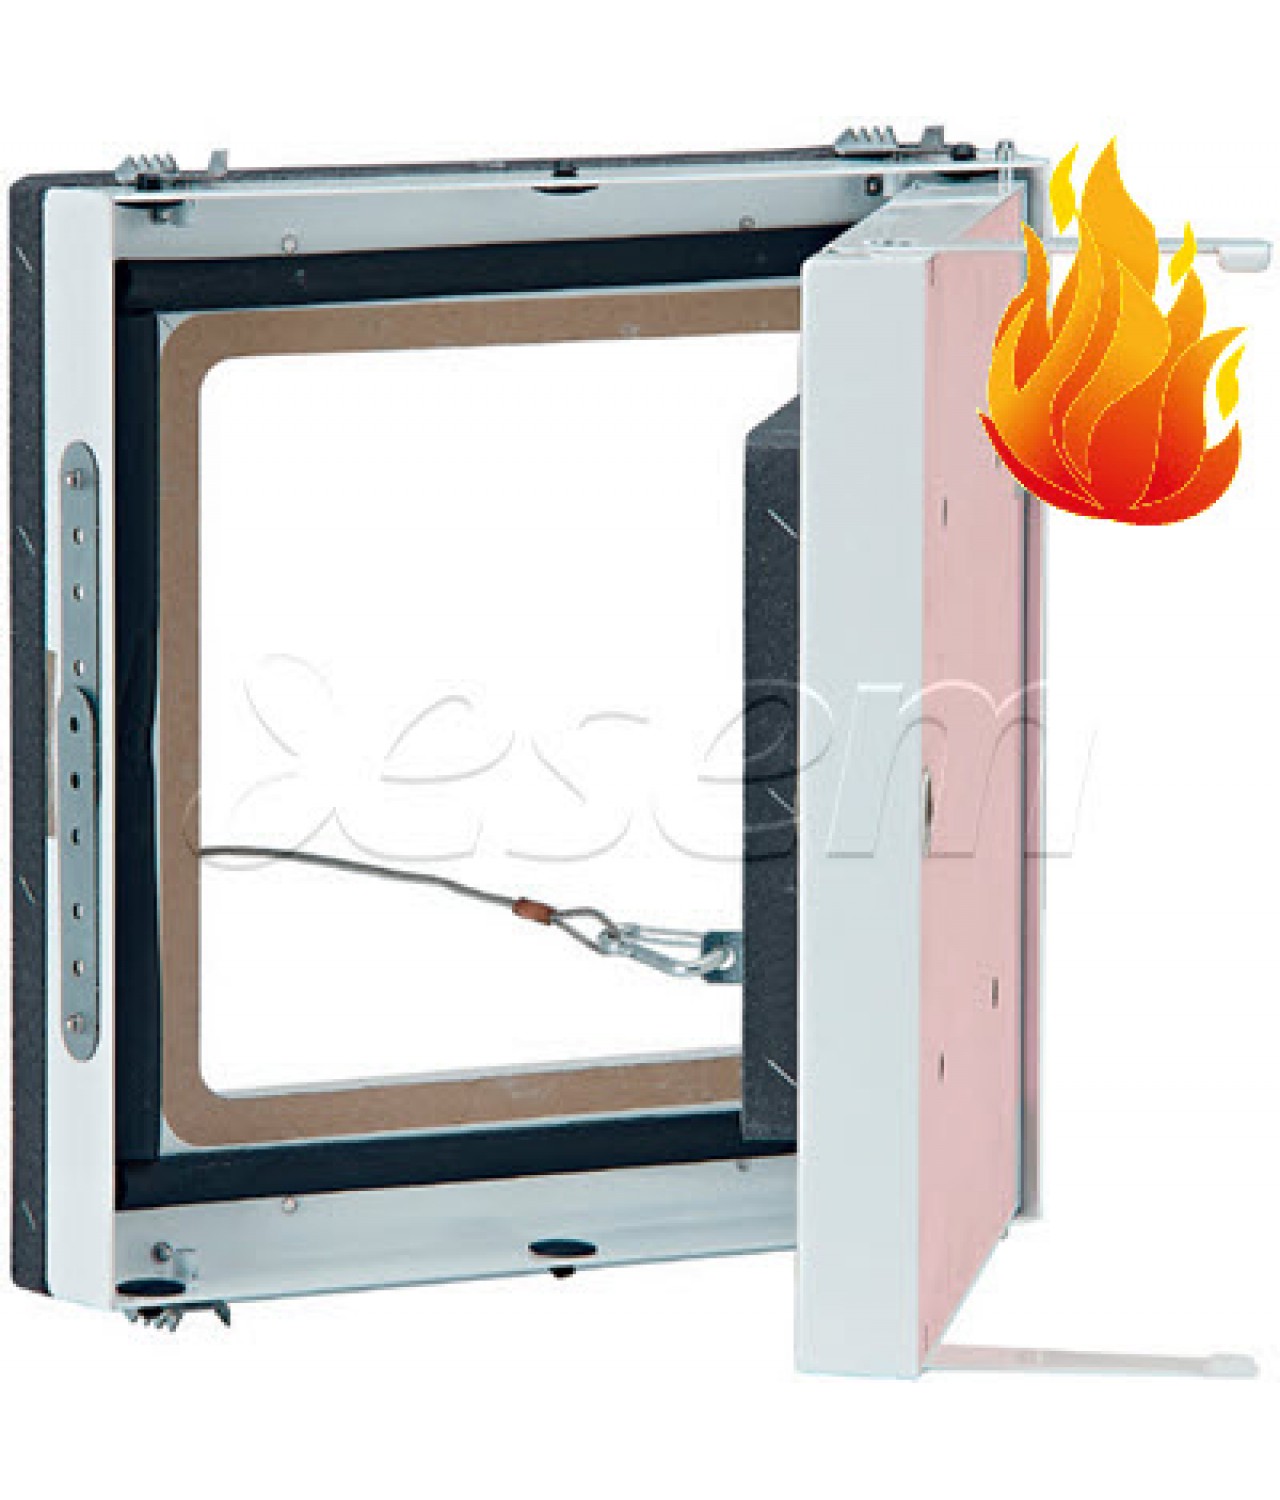 Fire rated access panels UNISPACE EI60 / EI90 opened